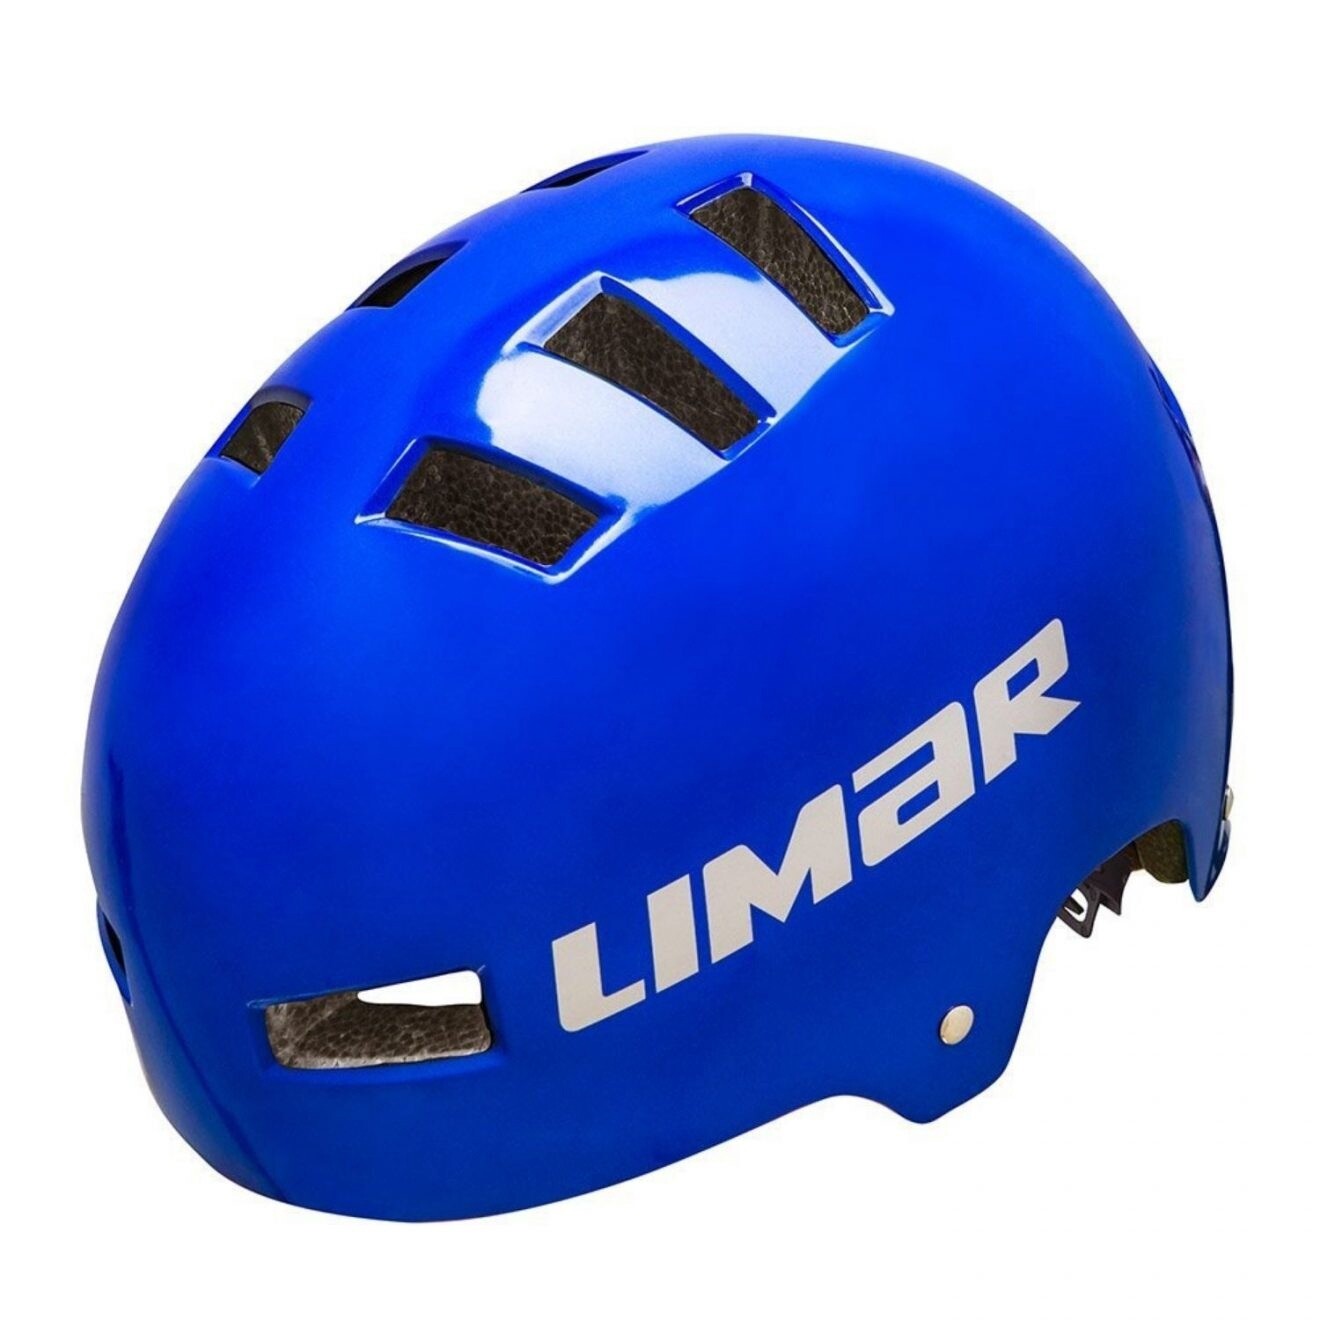 LIMAR 360 Helmet